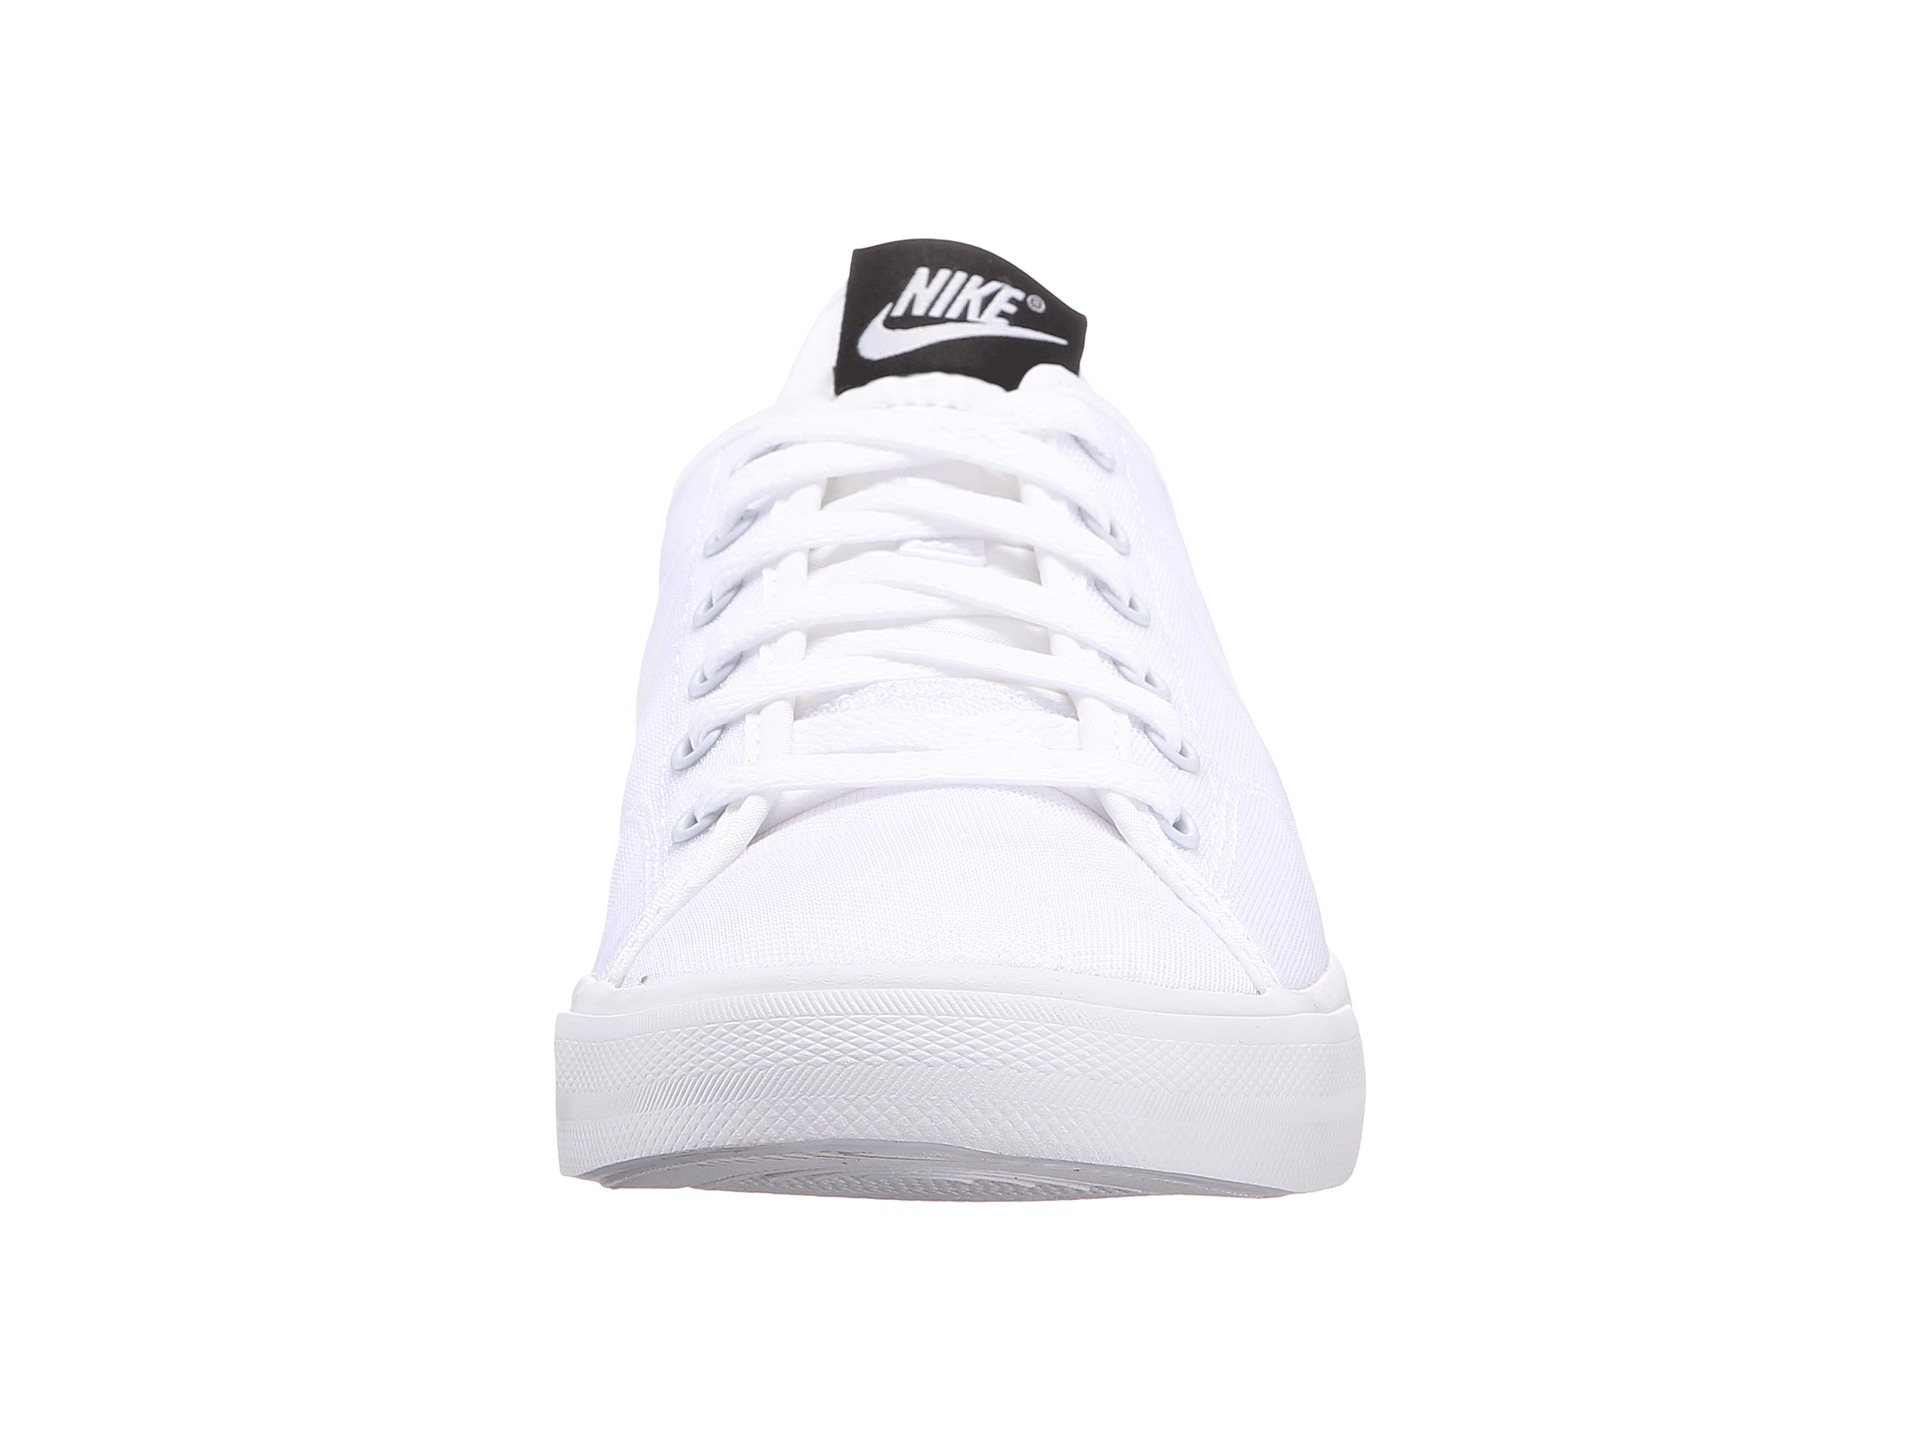 Nike Canvas Primo Court Br in White/White/Black (White) - Lyst